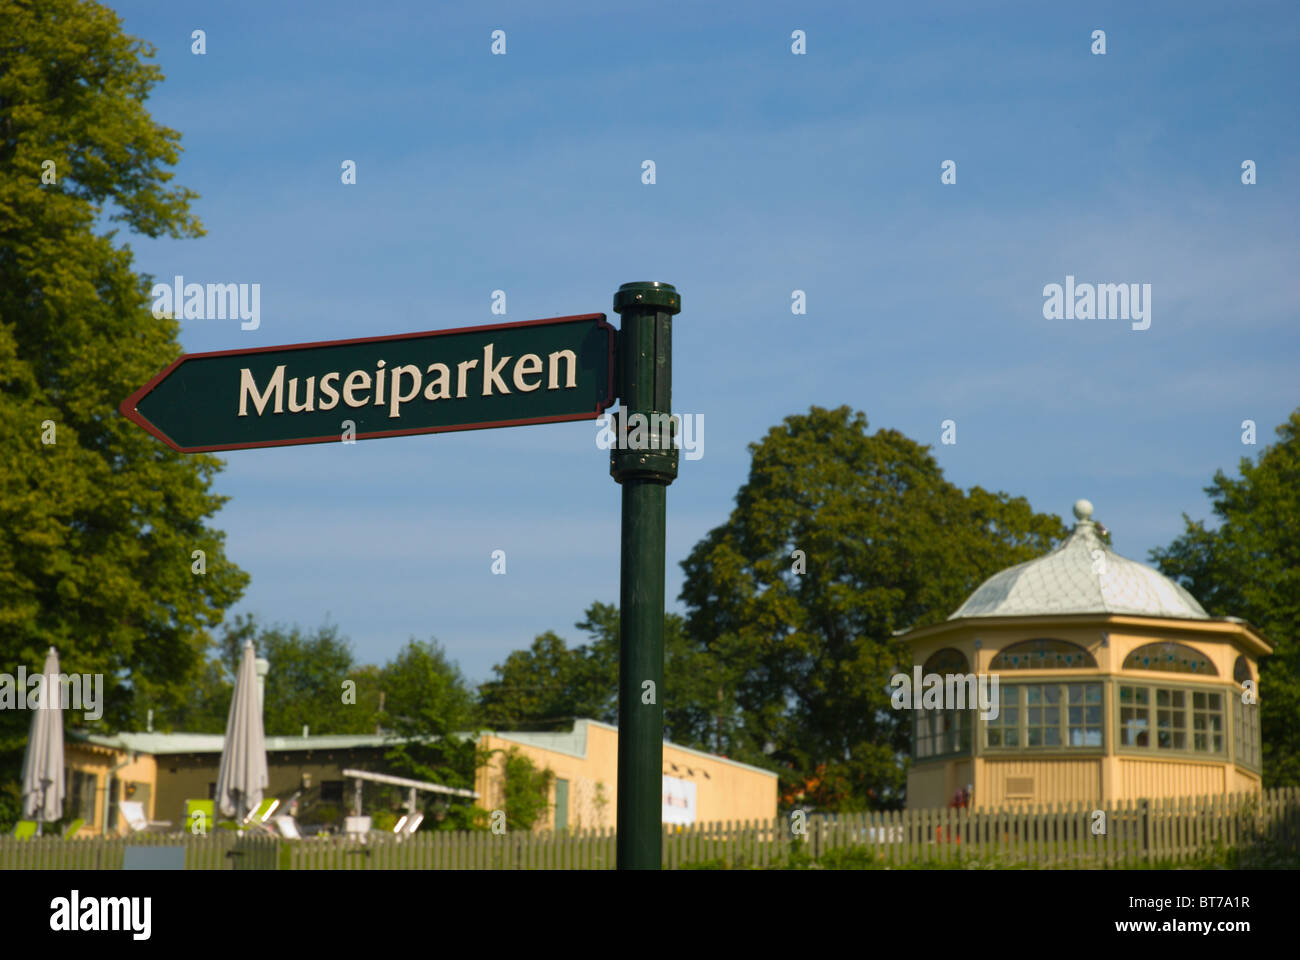 Museiparken the area with several museums in Ladugårdsgärdet park Stockholm Sweden Europe Stock Photo